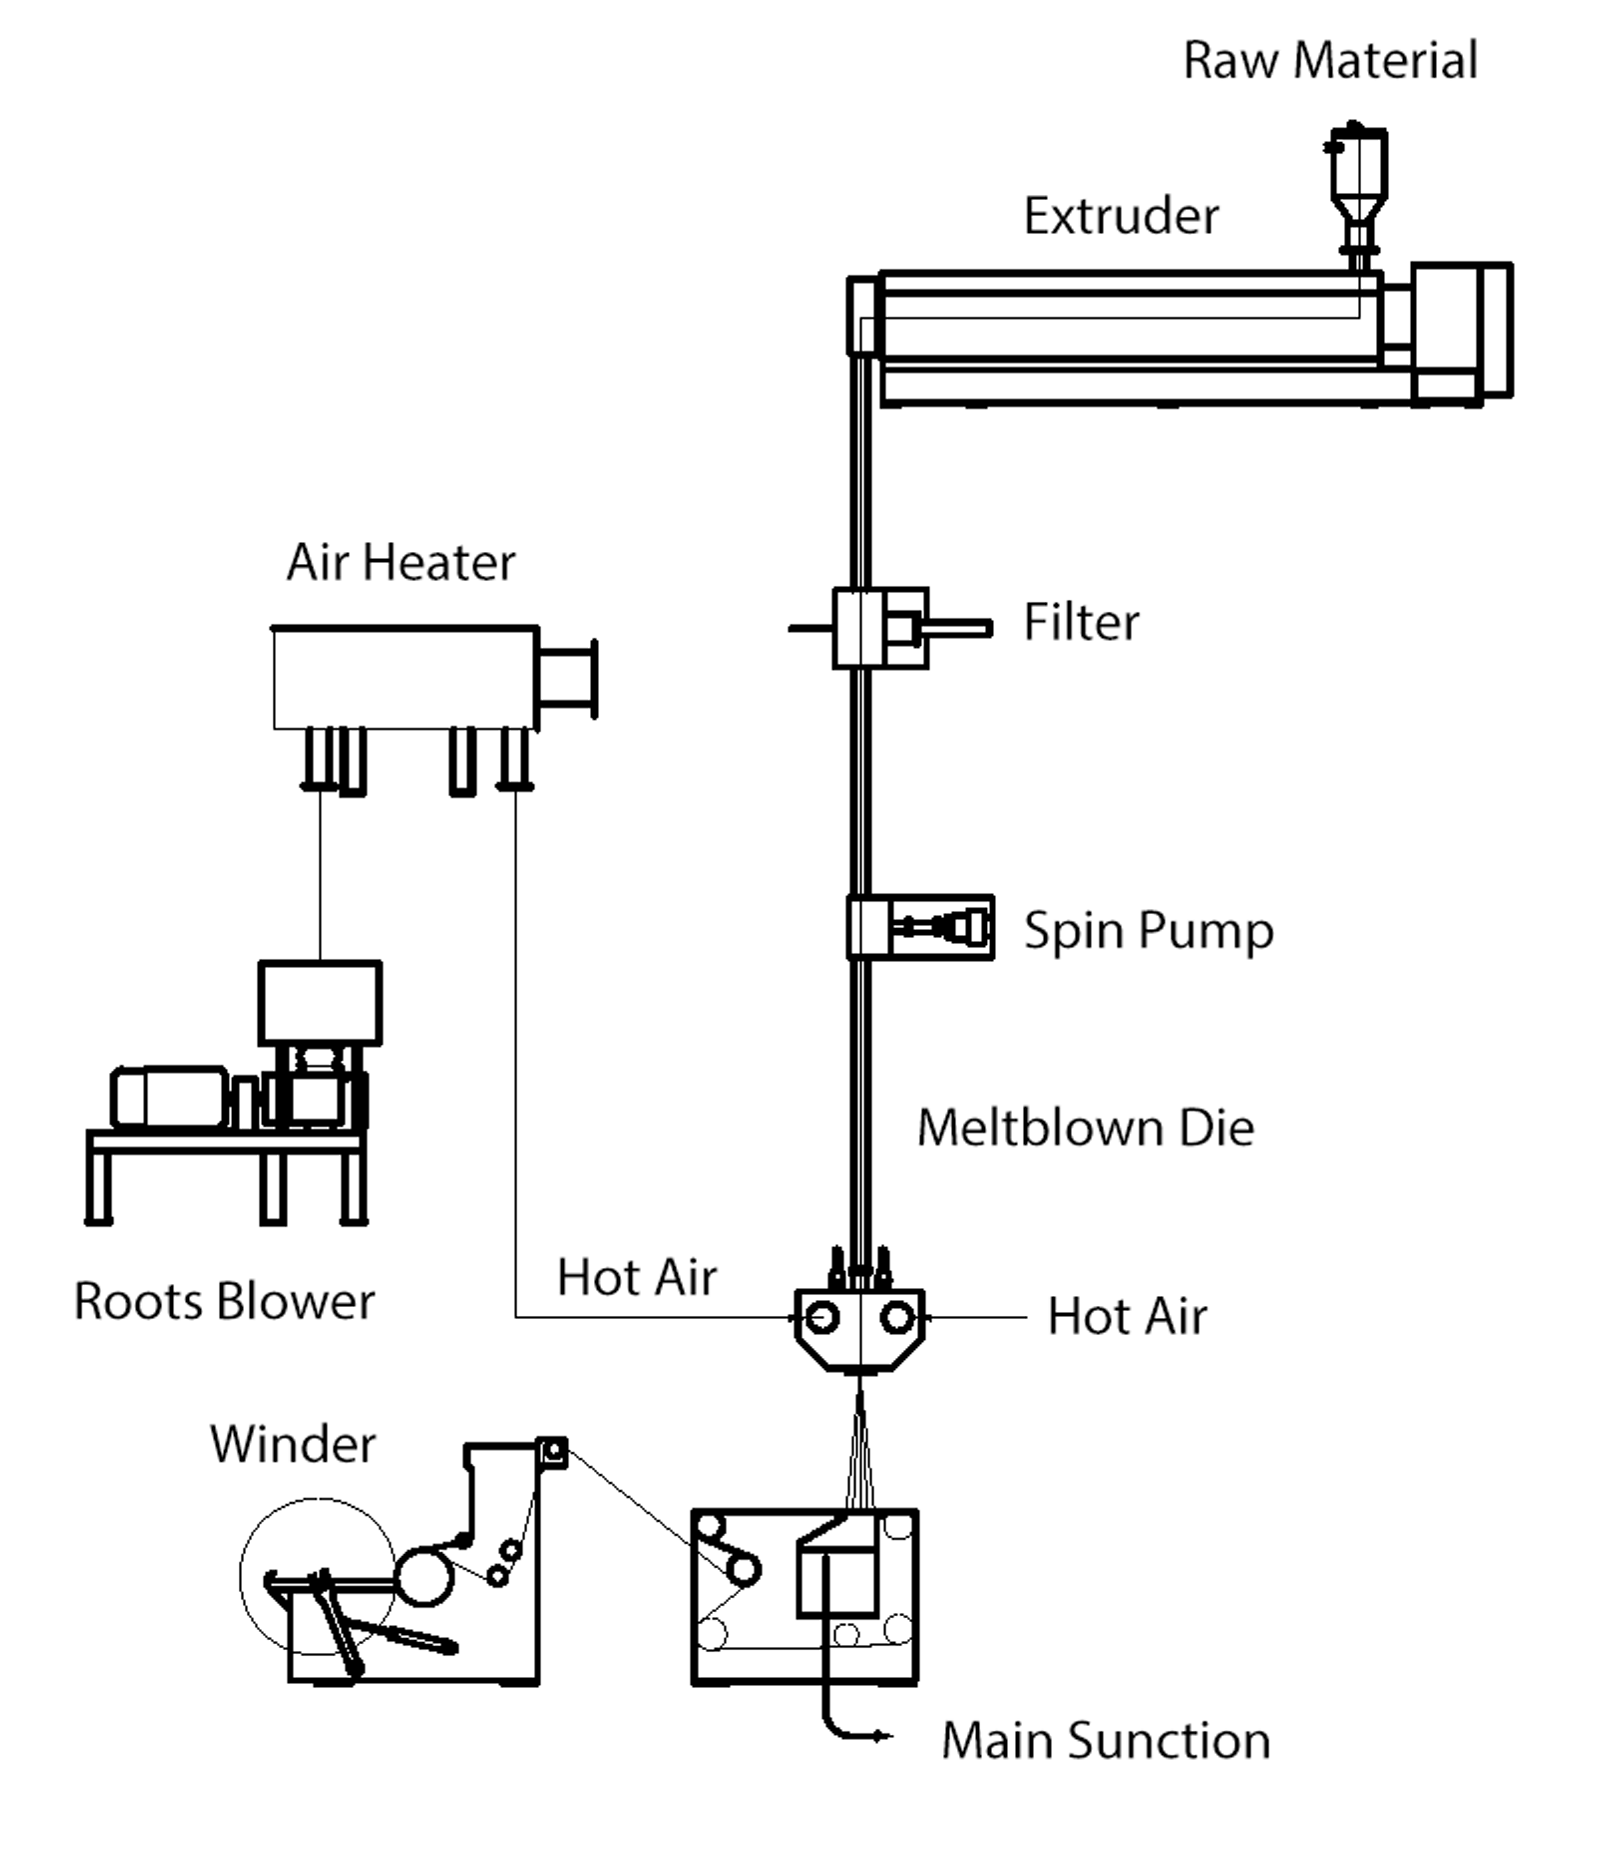 Singlerow Meltblown Line Process Flow Diagram